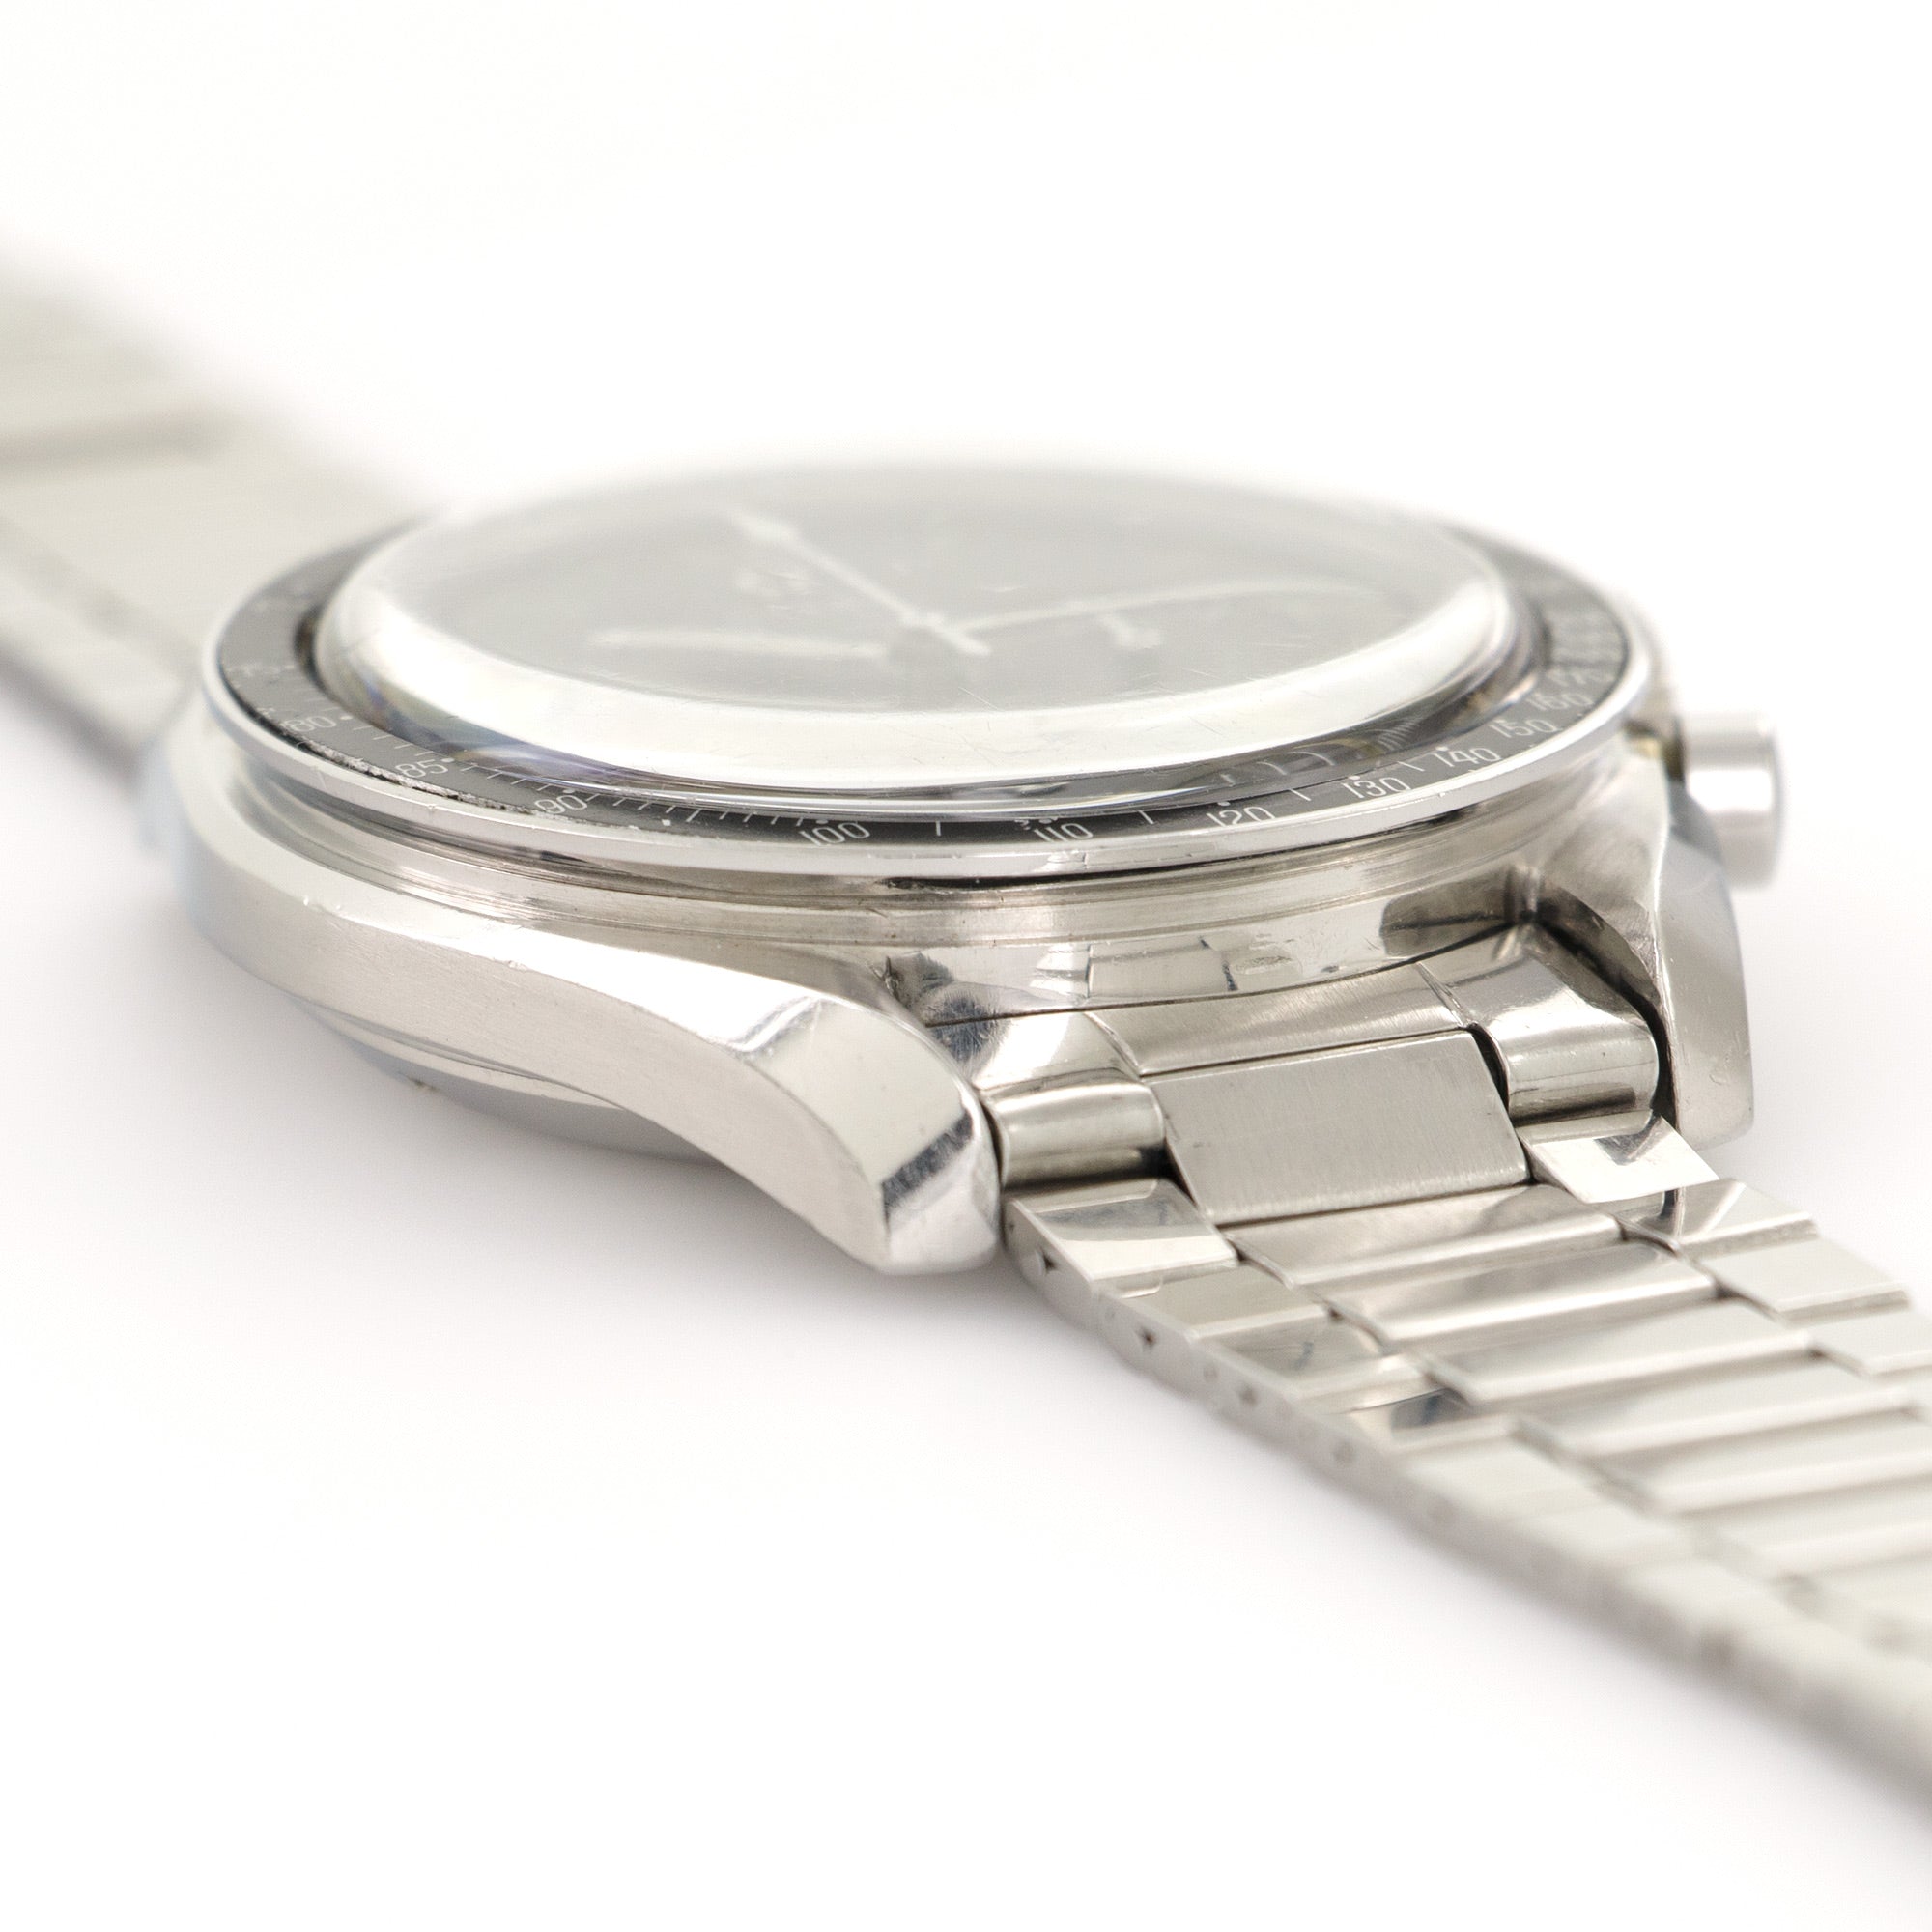 Omega - Omega Steel Speedmaster Chronograph Watch Ref. 105.012 - The Keystone Watches